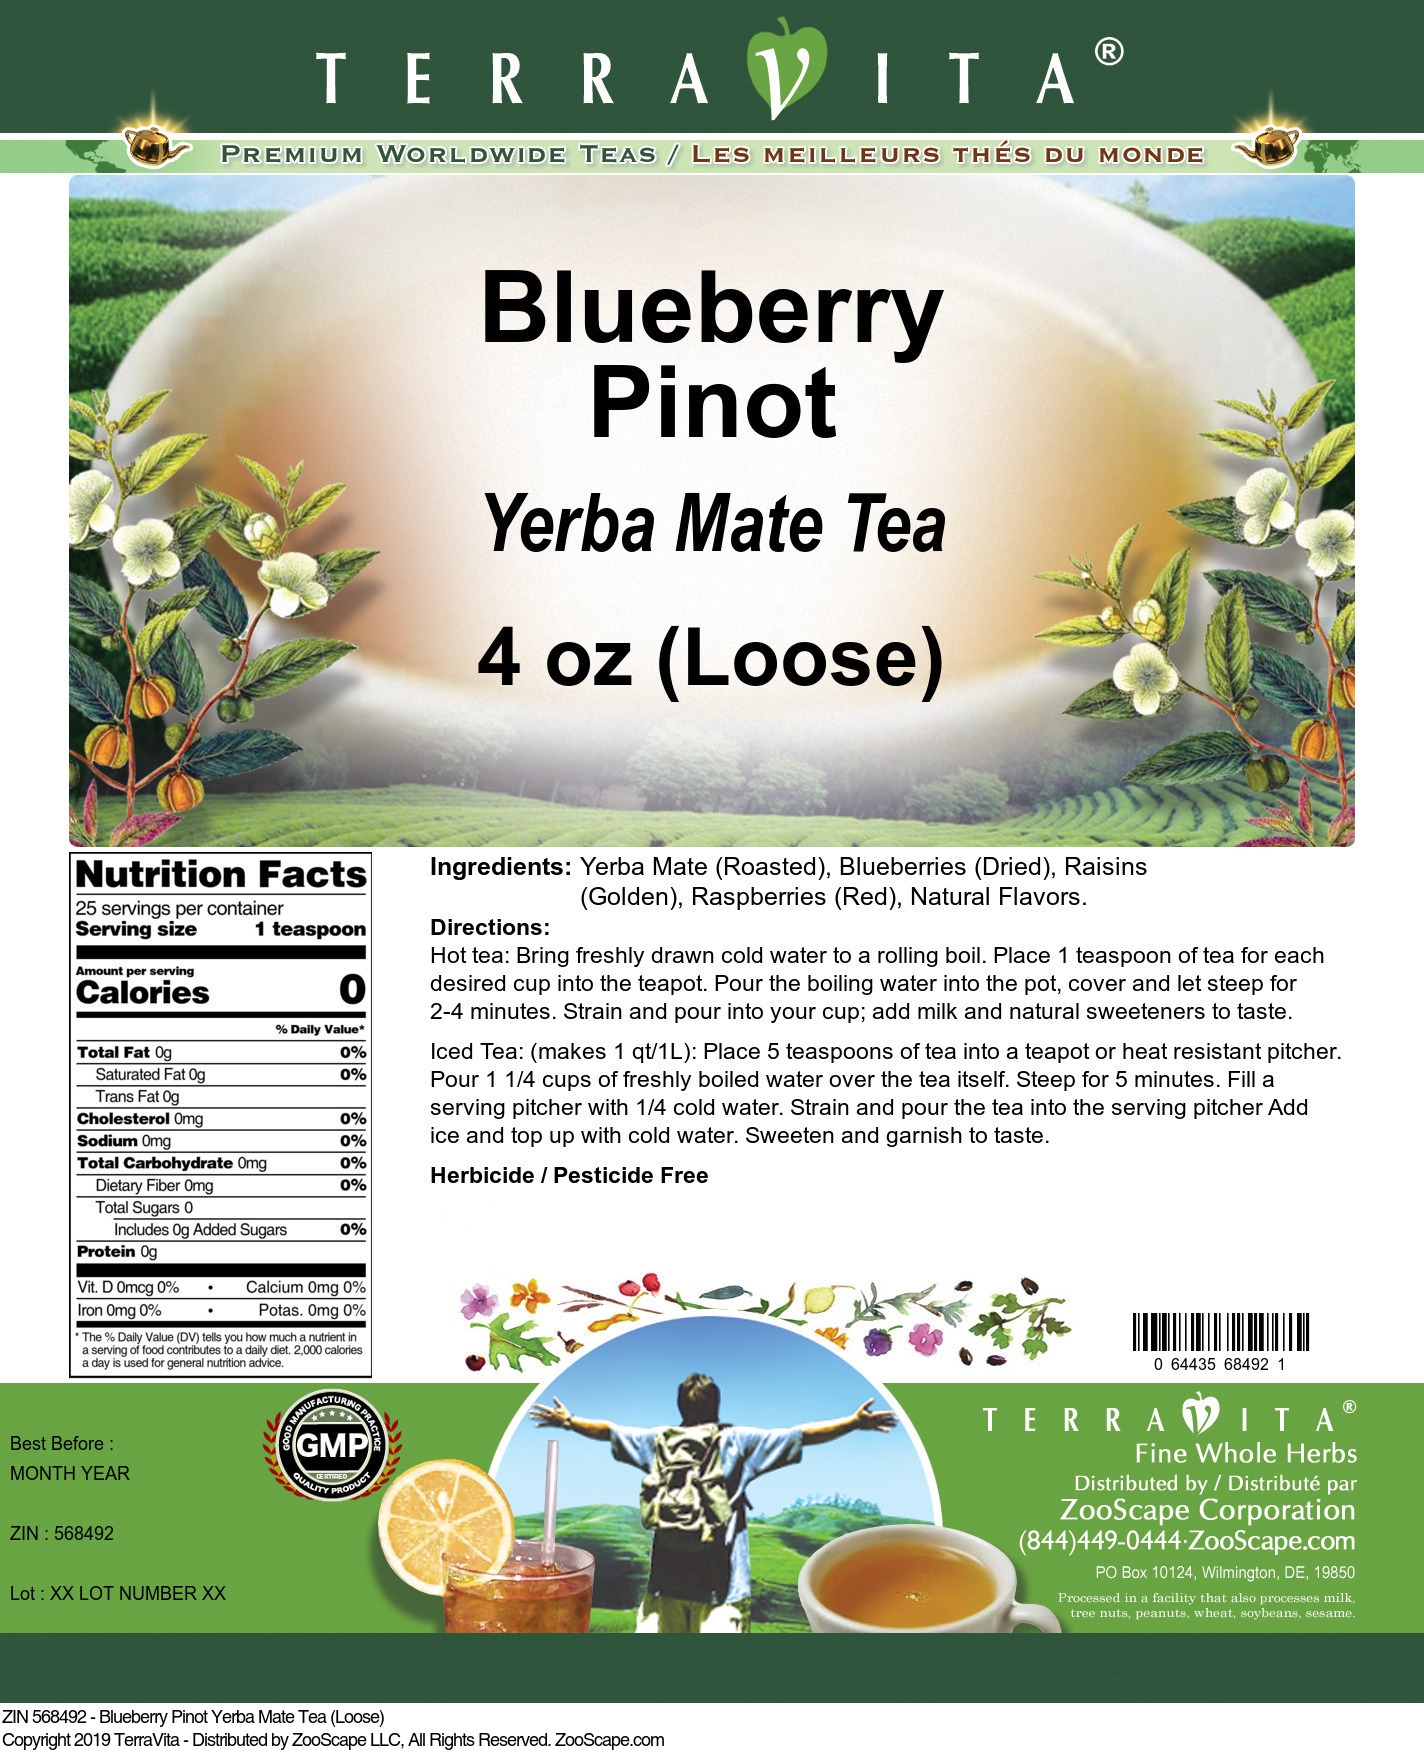 Blueberry Pinot Yerba Mate Tea (Loose) - Label